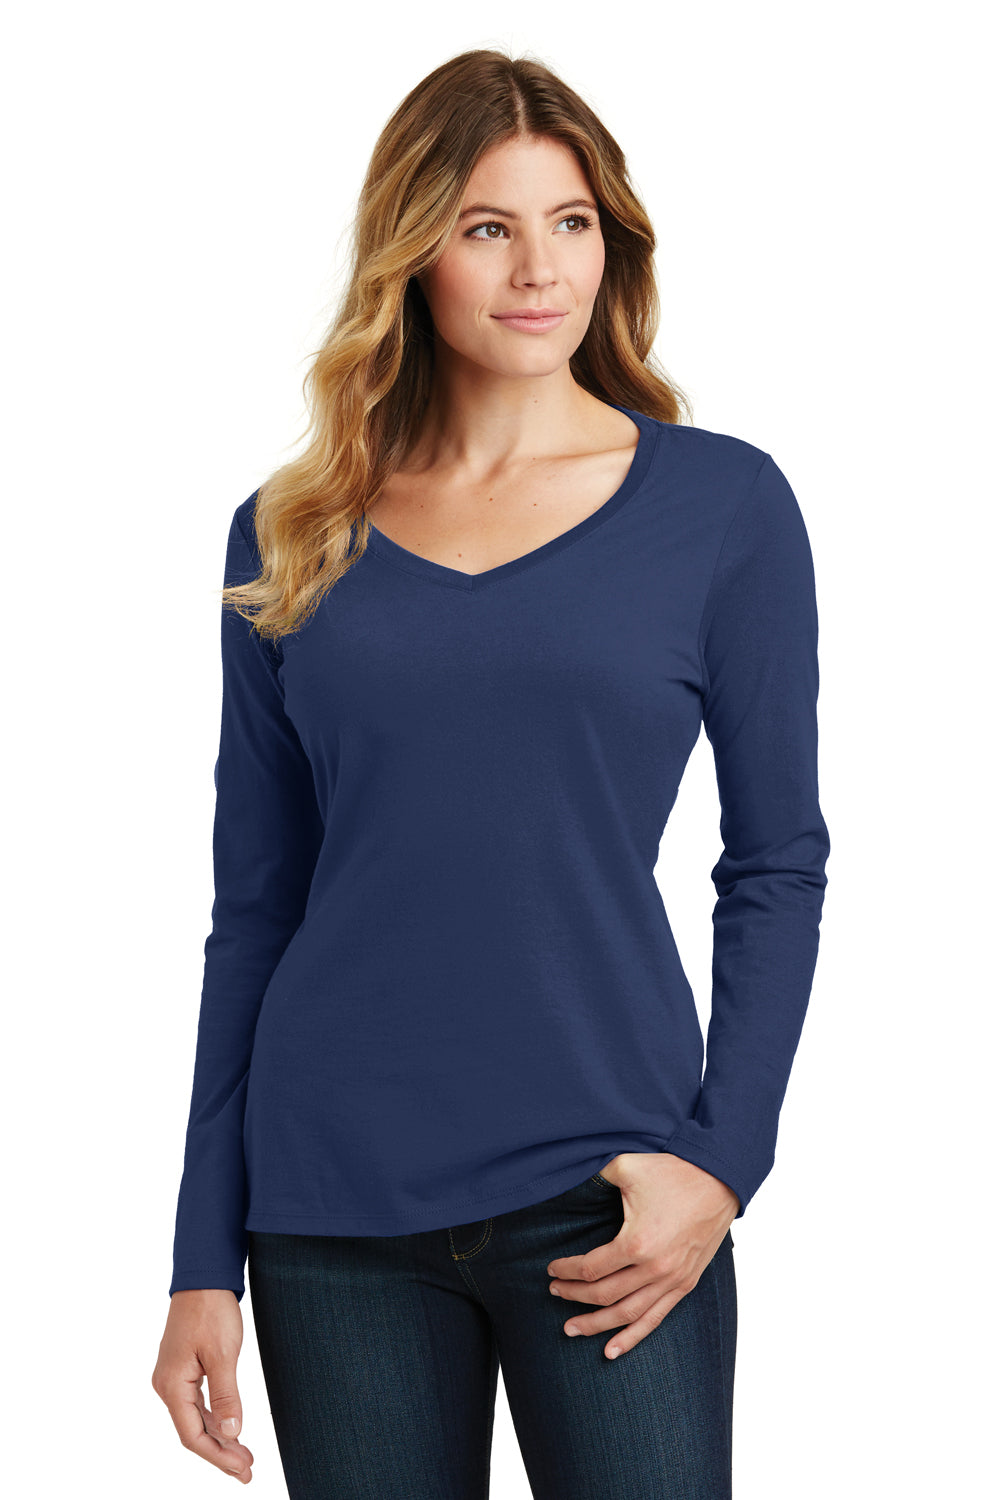 Port & Company LPC450VLS Womens Fan Favorite Long Sleeve V-Neck T-Shirt Navy Blue Front